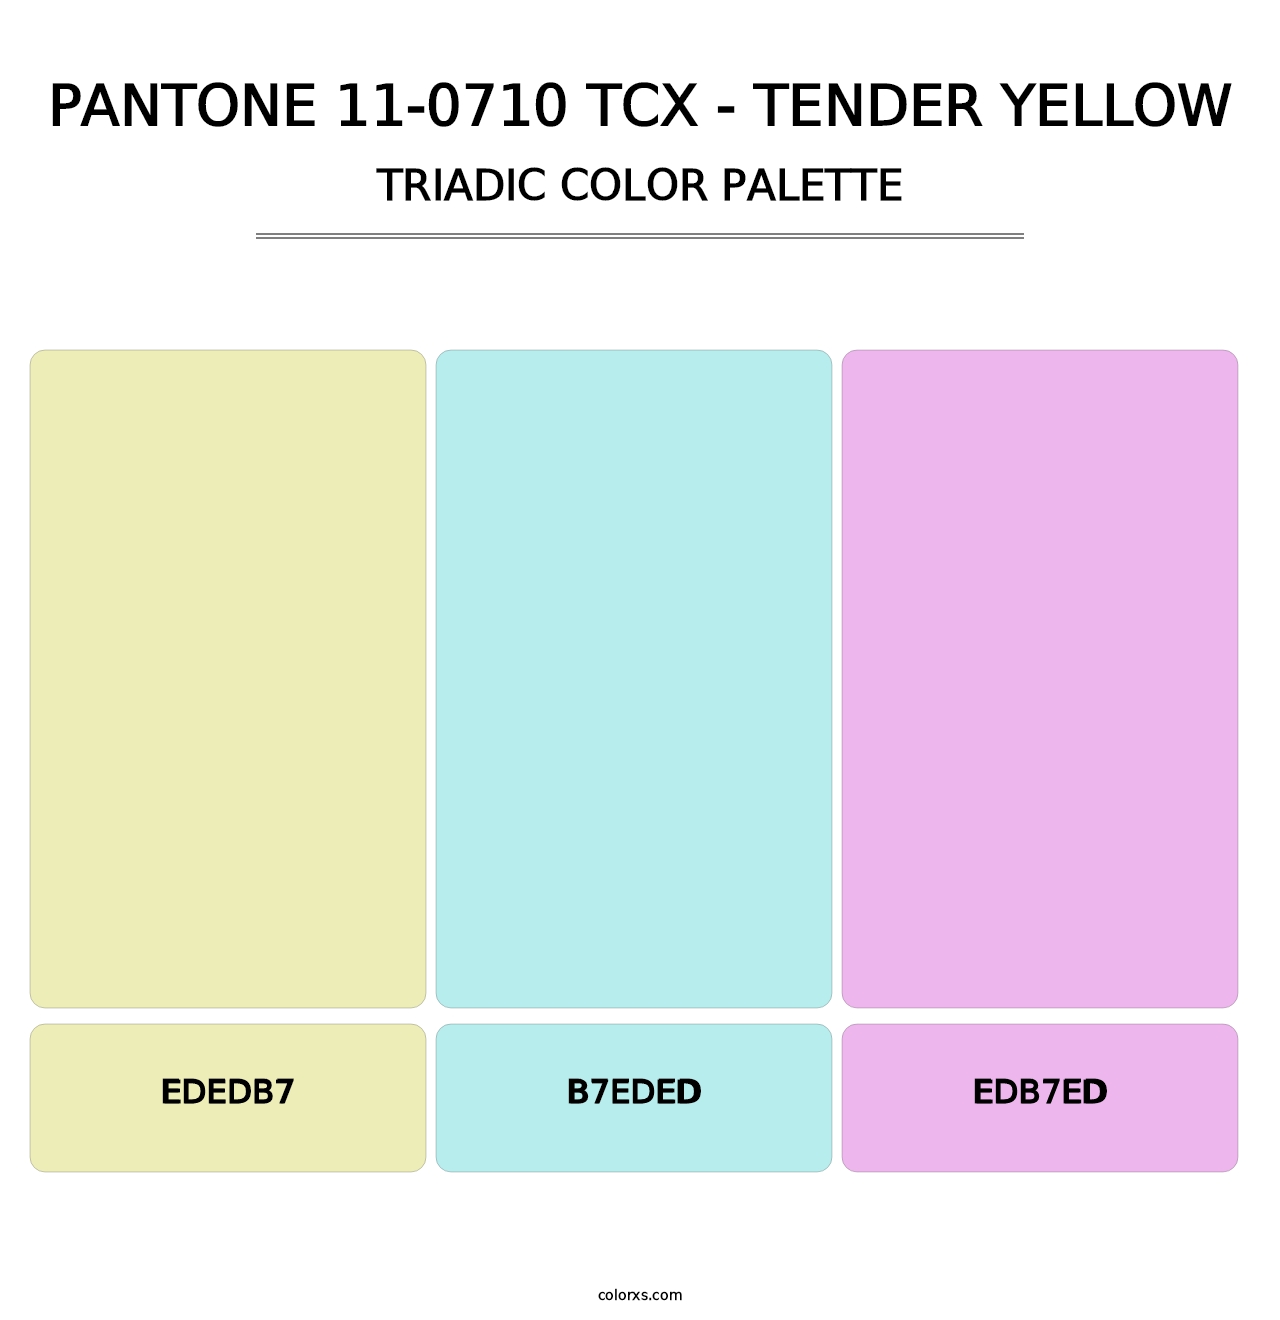 PANTONE 11-0710 TCX - Tender Yellow - Triadic Color Palette